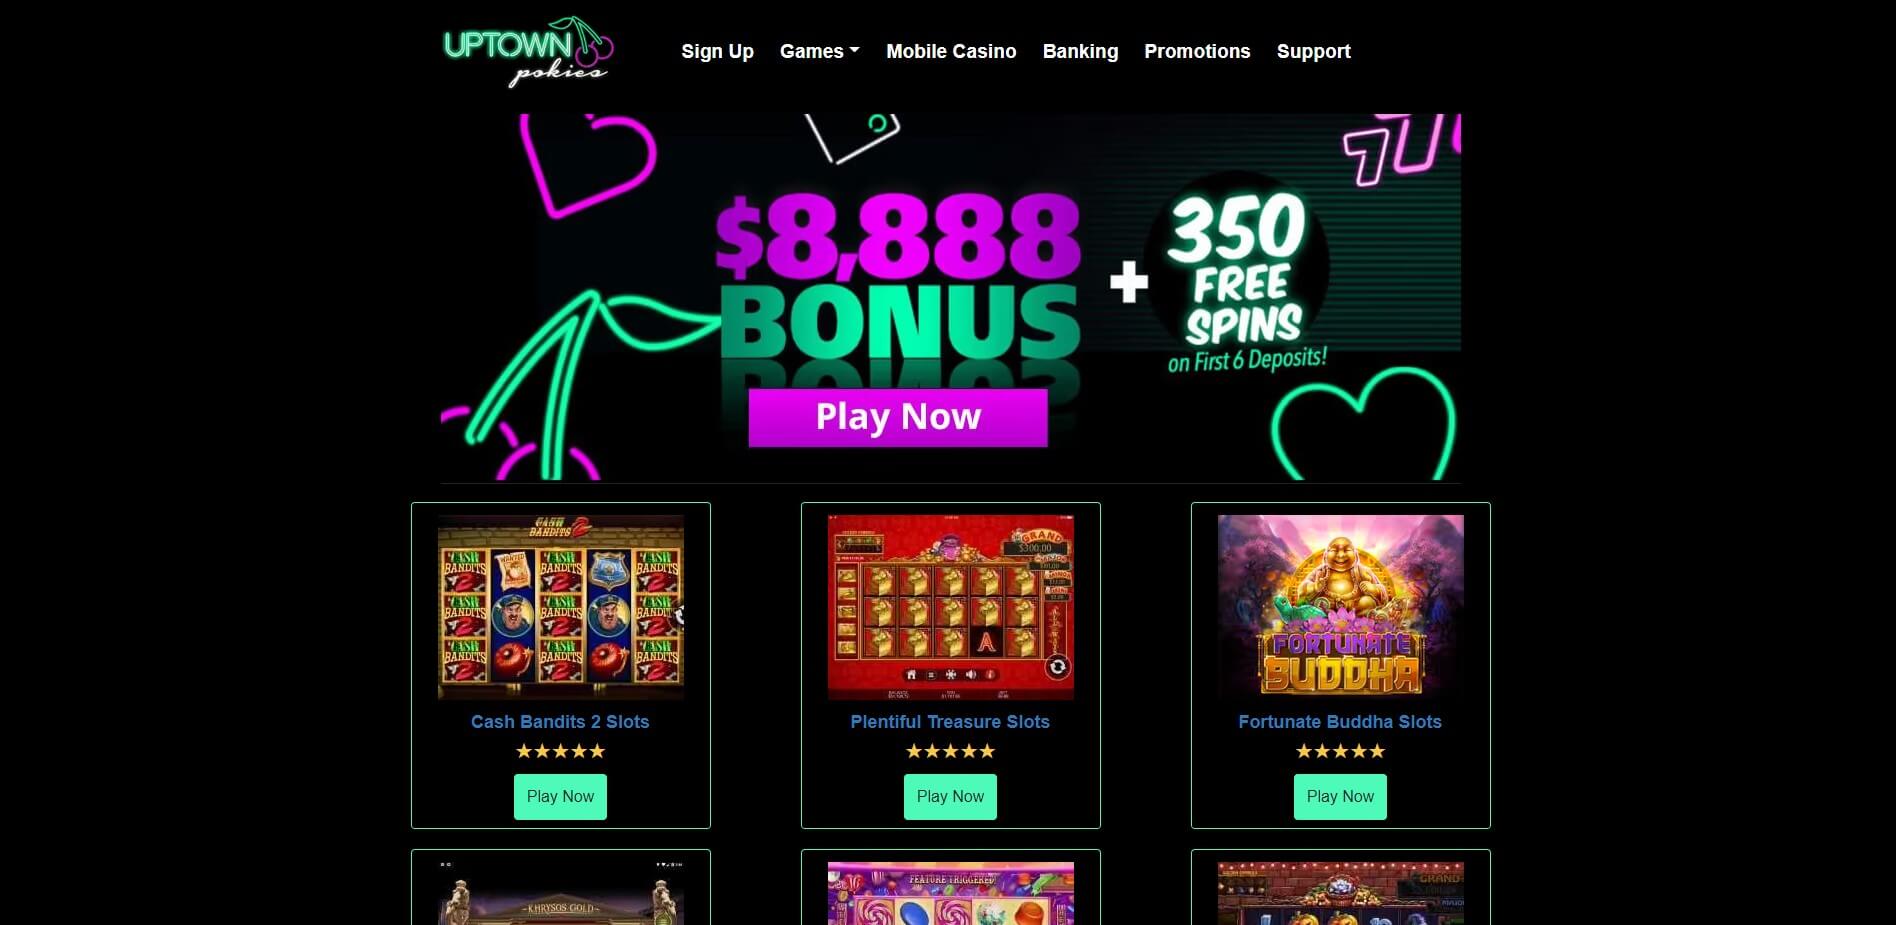 Types of Uptown Pokies Casino Australia